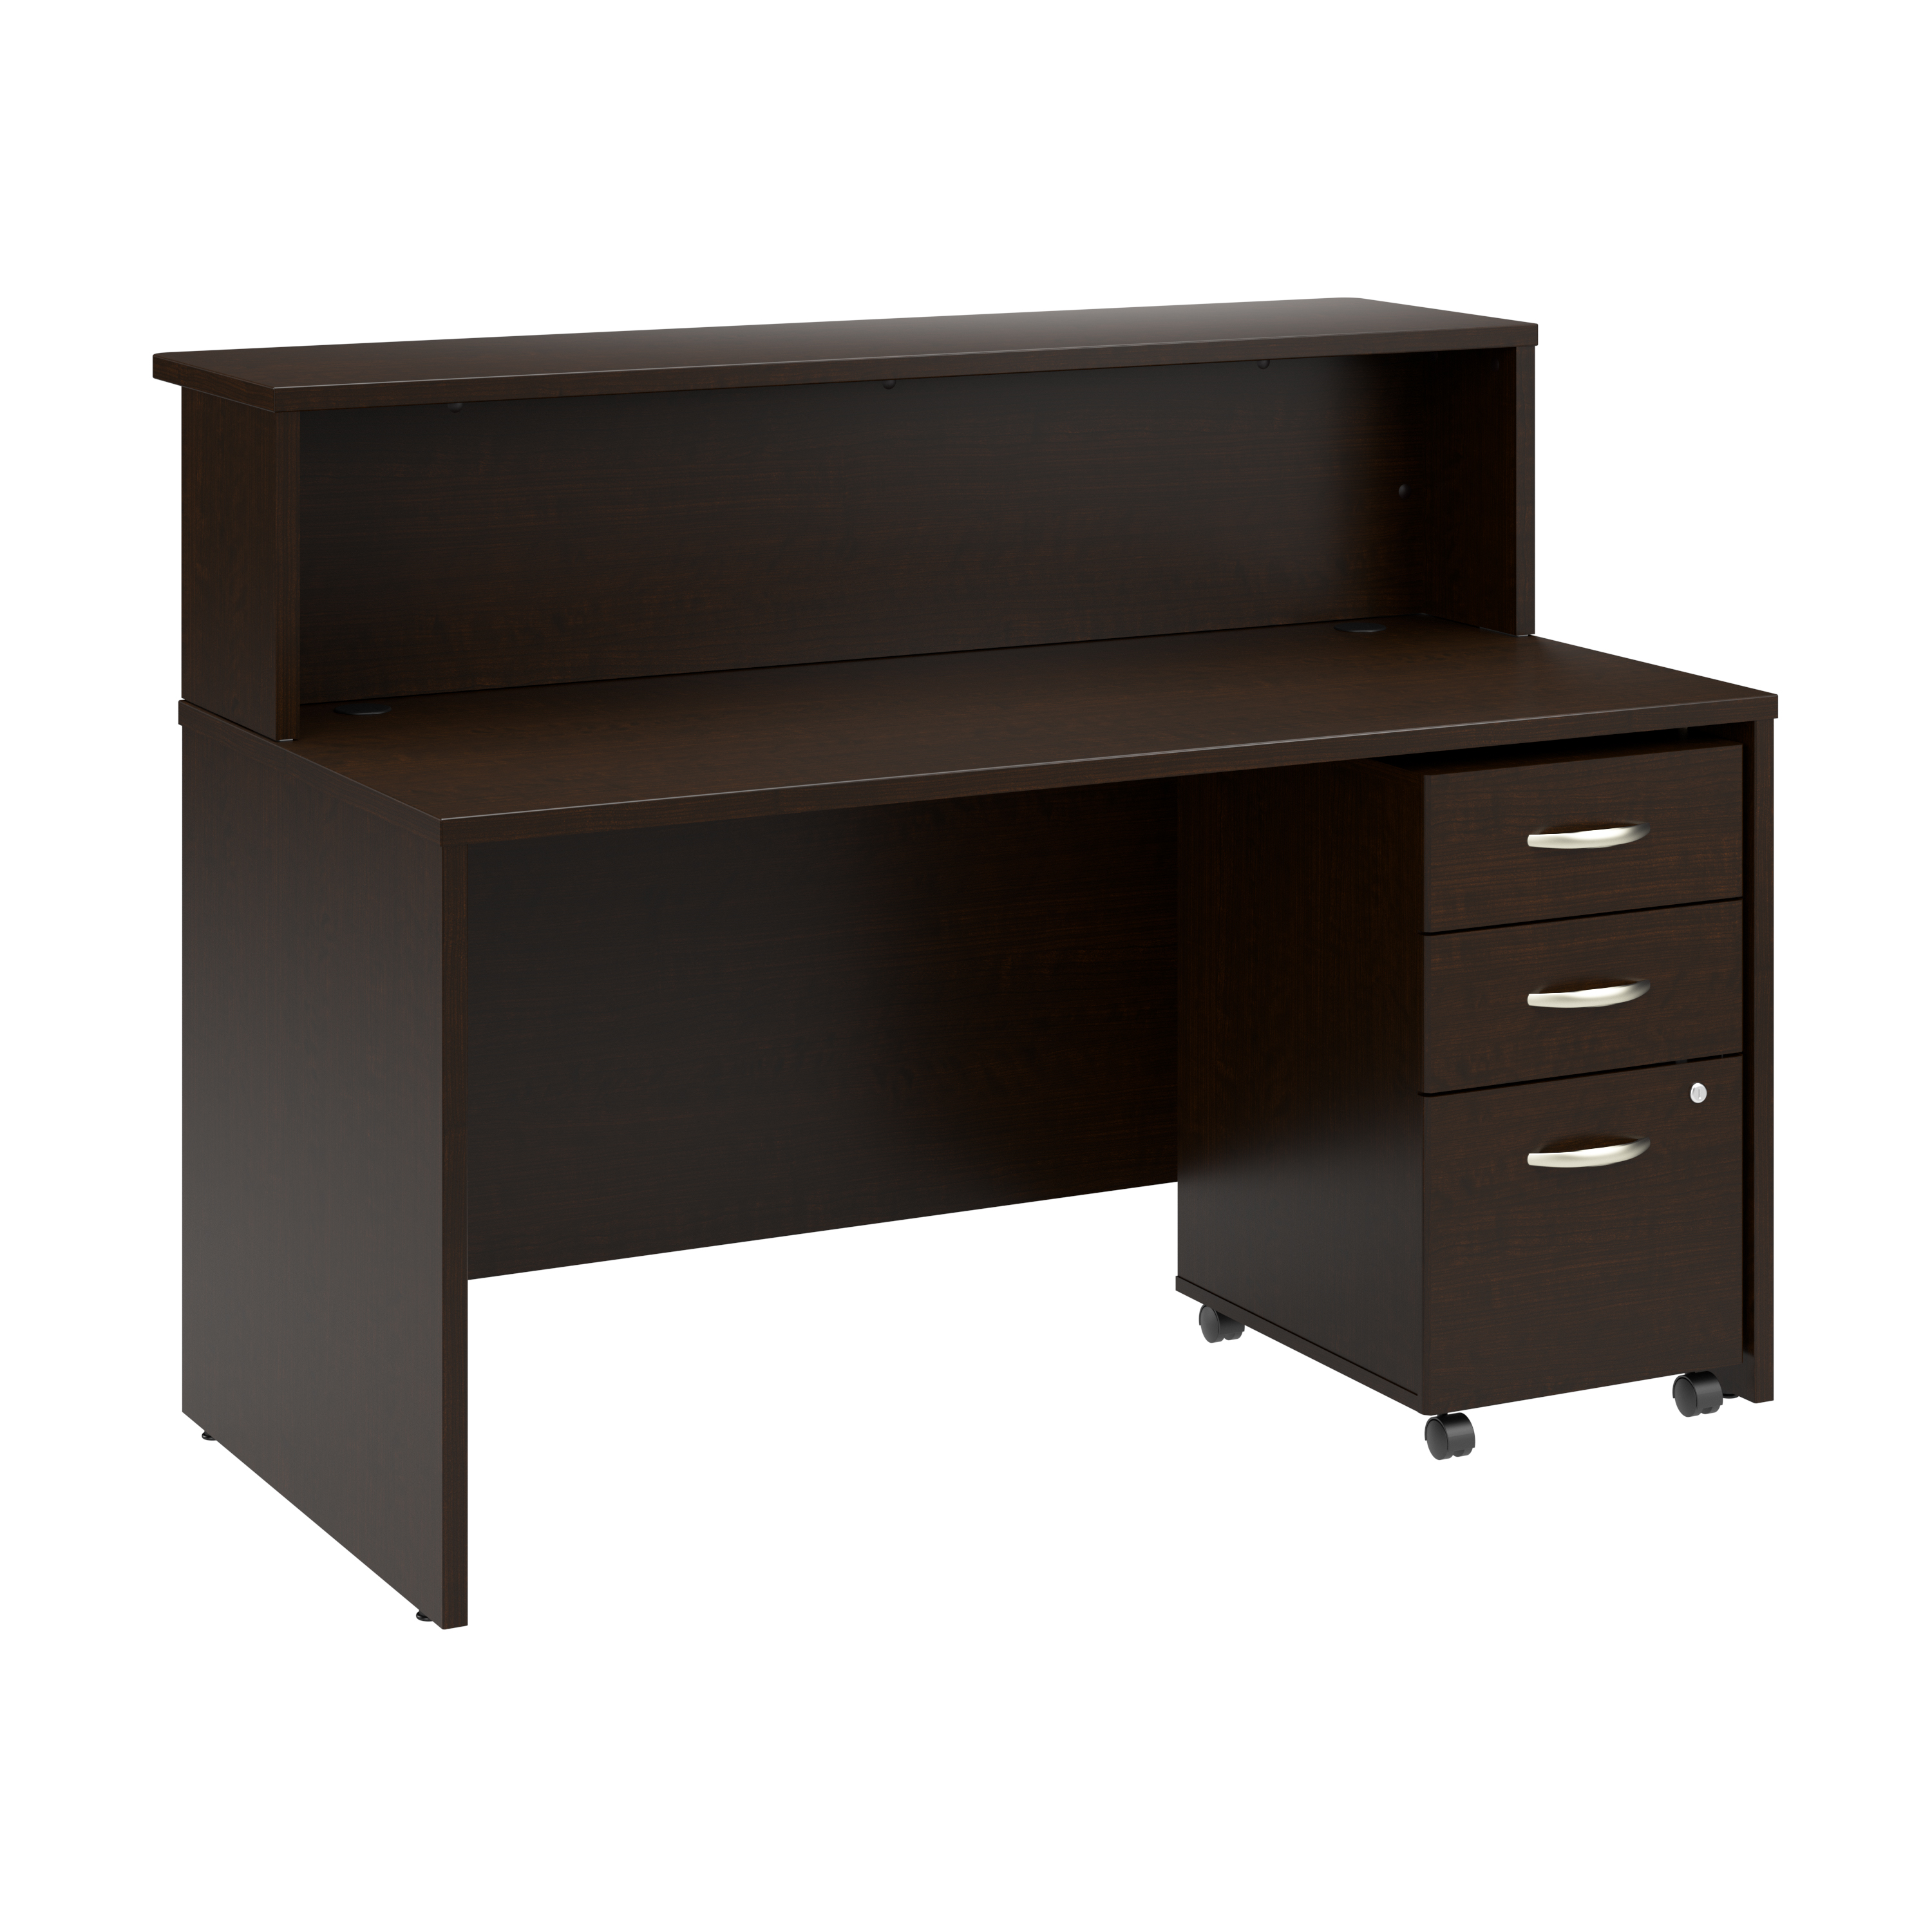 Shop Bush Business Furniture Arrive 60W x 30D Reception Desk with Shelf and Mobile File Cabinet 02 ARV002MR #color_mocha cherry